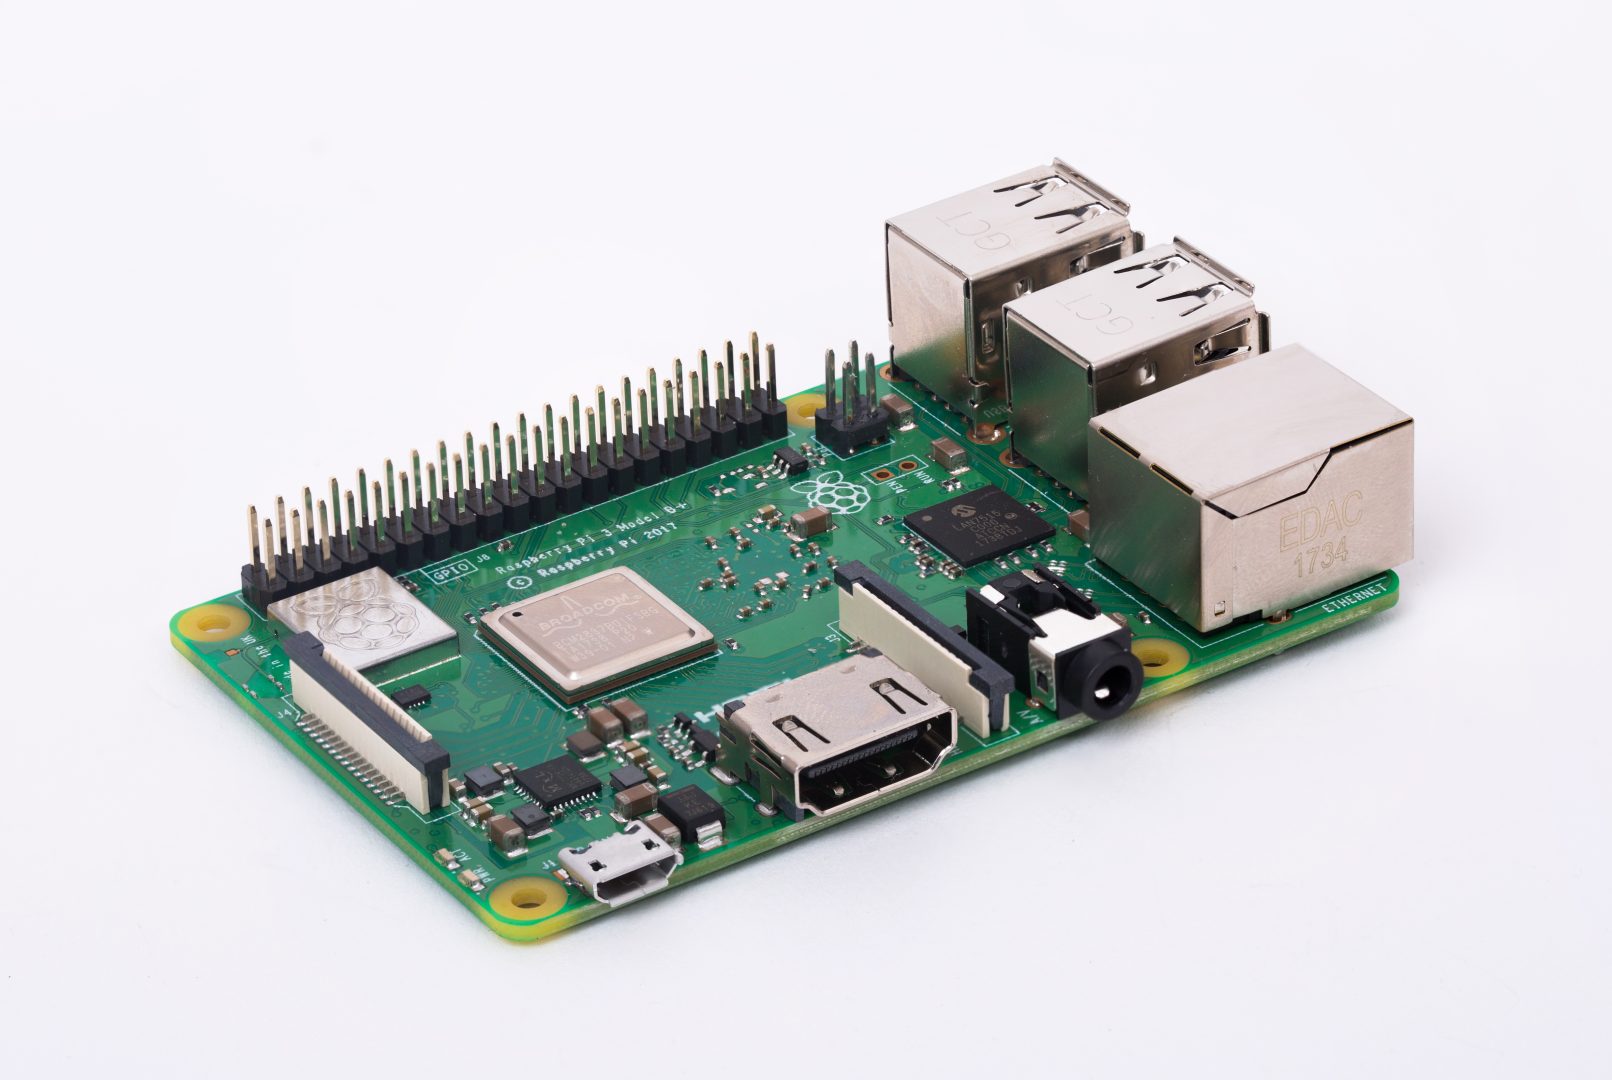 Raspberry Pi 3 Model B+ tanıtıldı: Daha hızlı CPU ve 5 GHz Wi-Fi